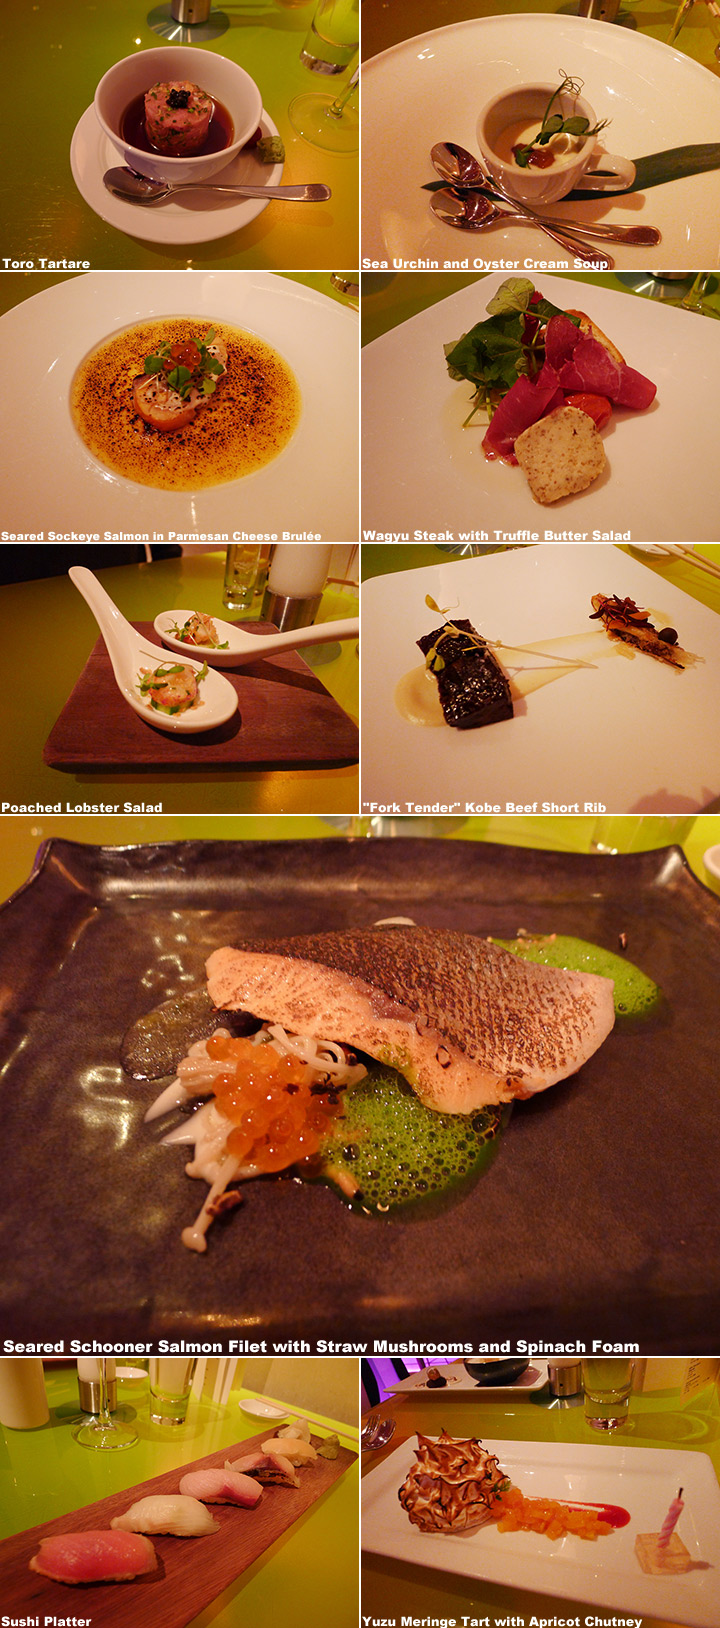 http://www.claredin.com/food/images2013/morimoto_omakase_021113.jpg